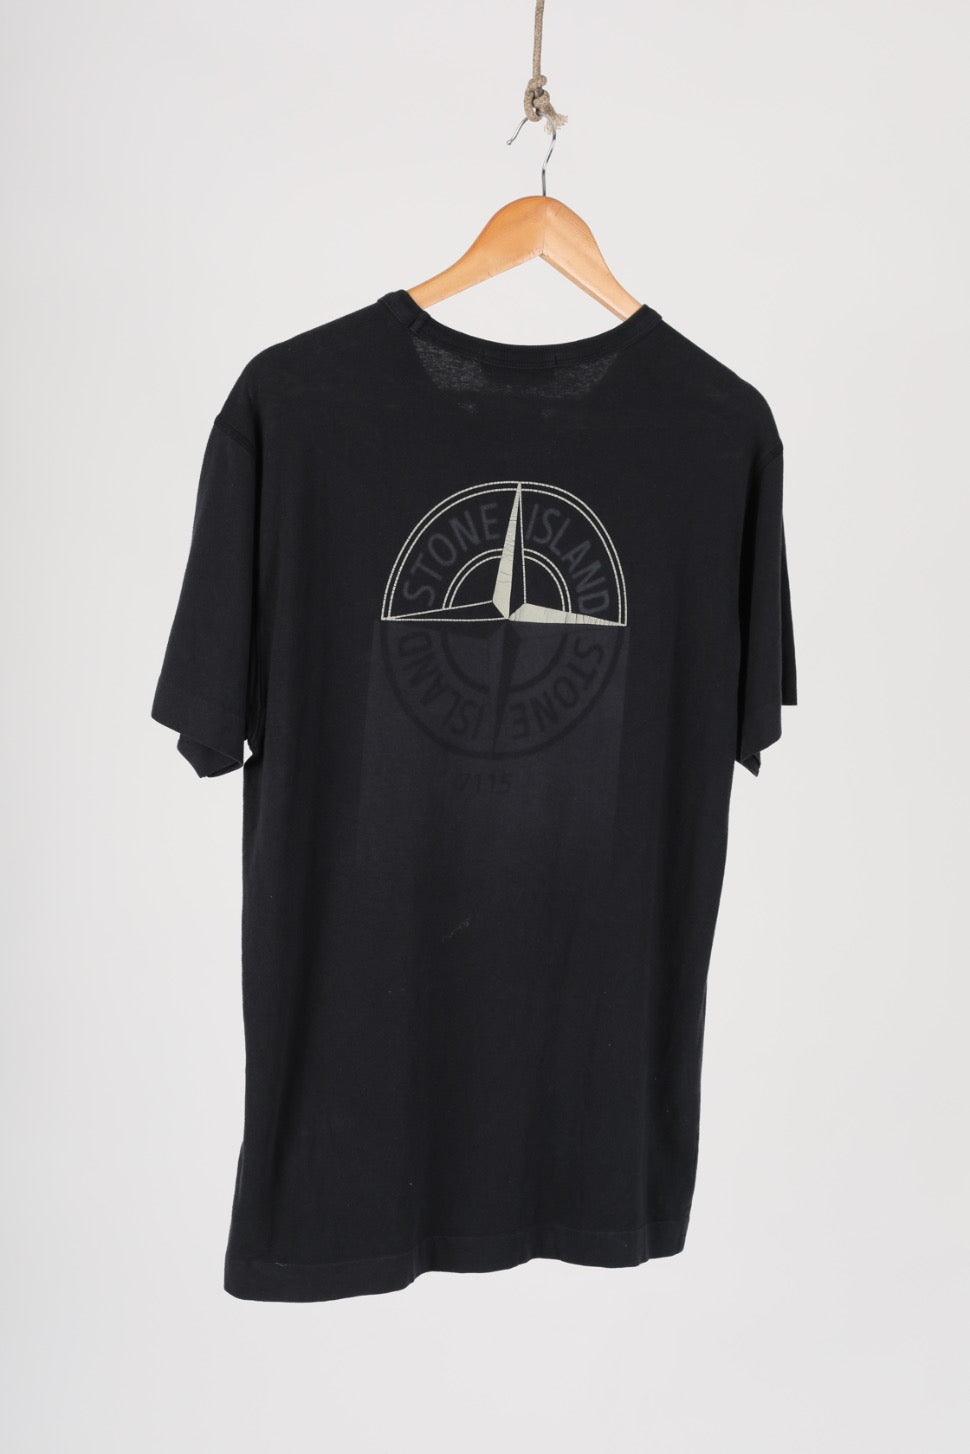 2019 Stone Island Compass t-shirt (Medium)